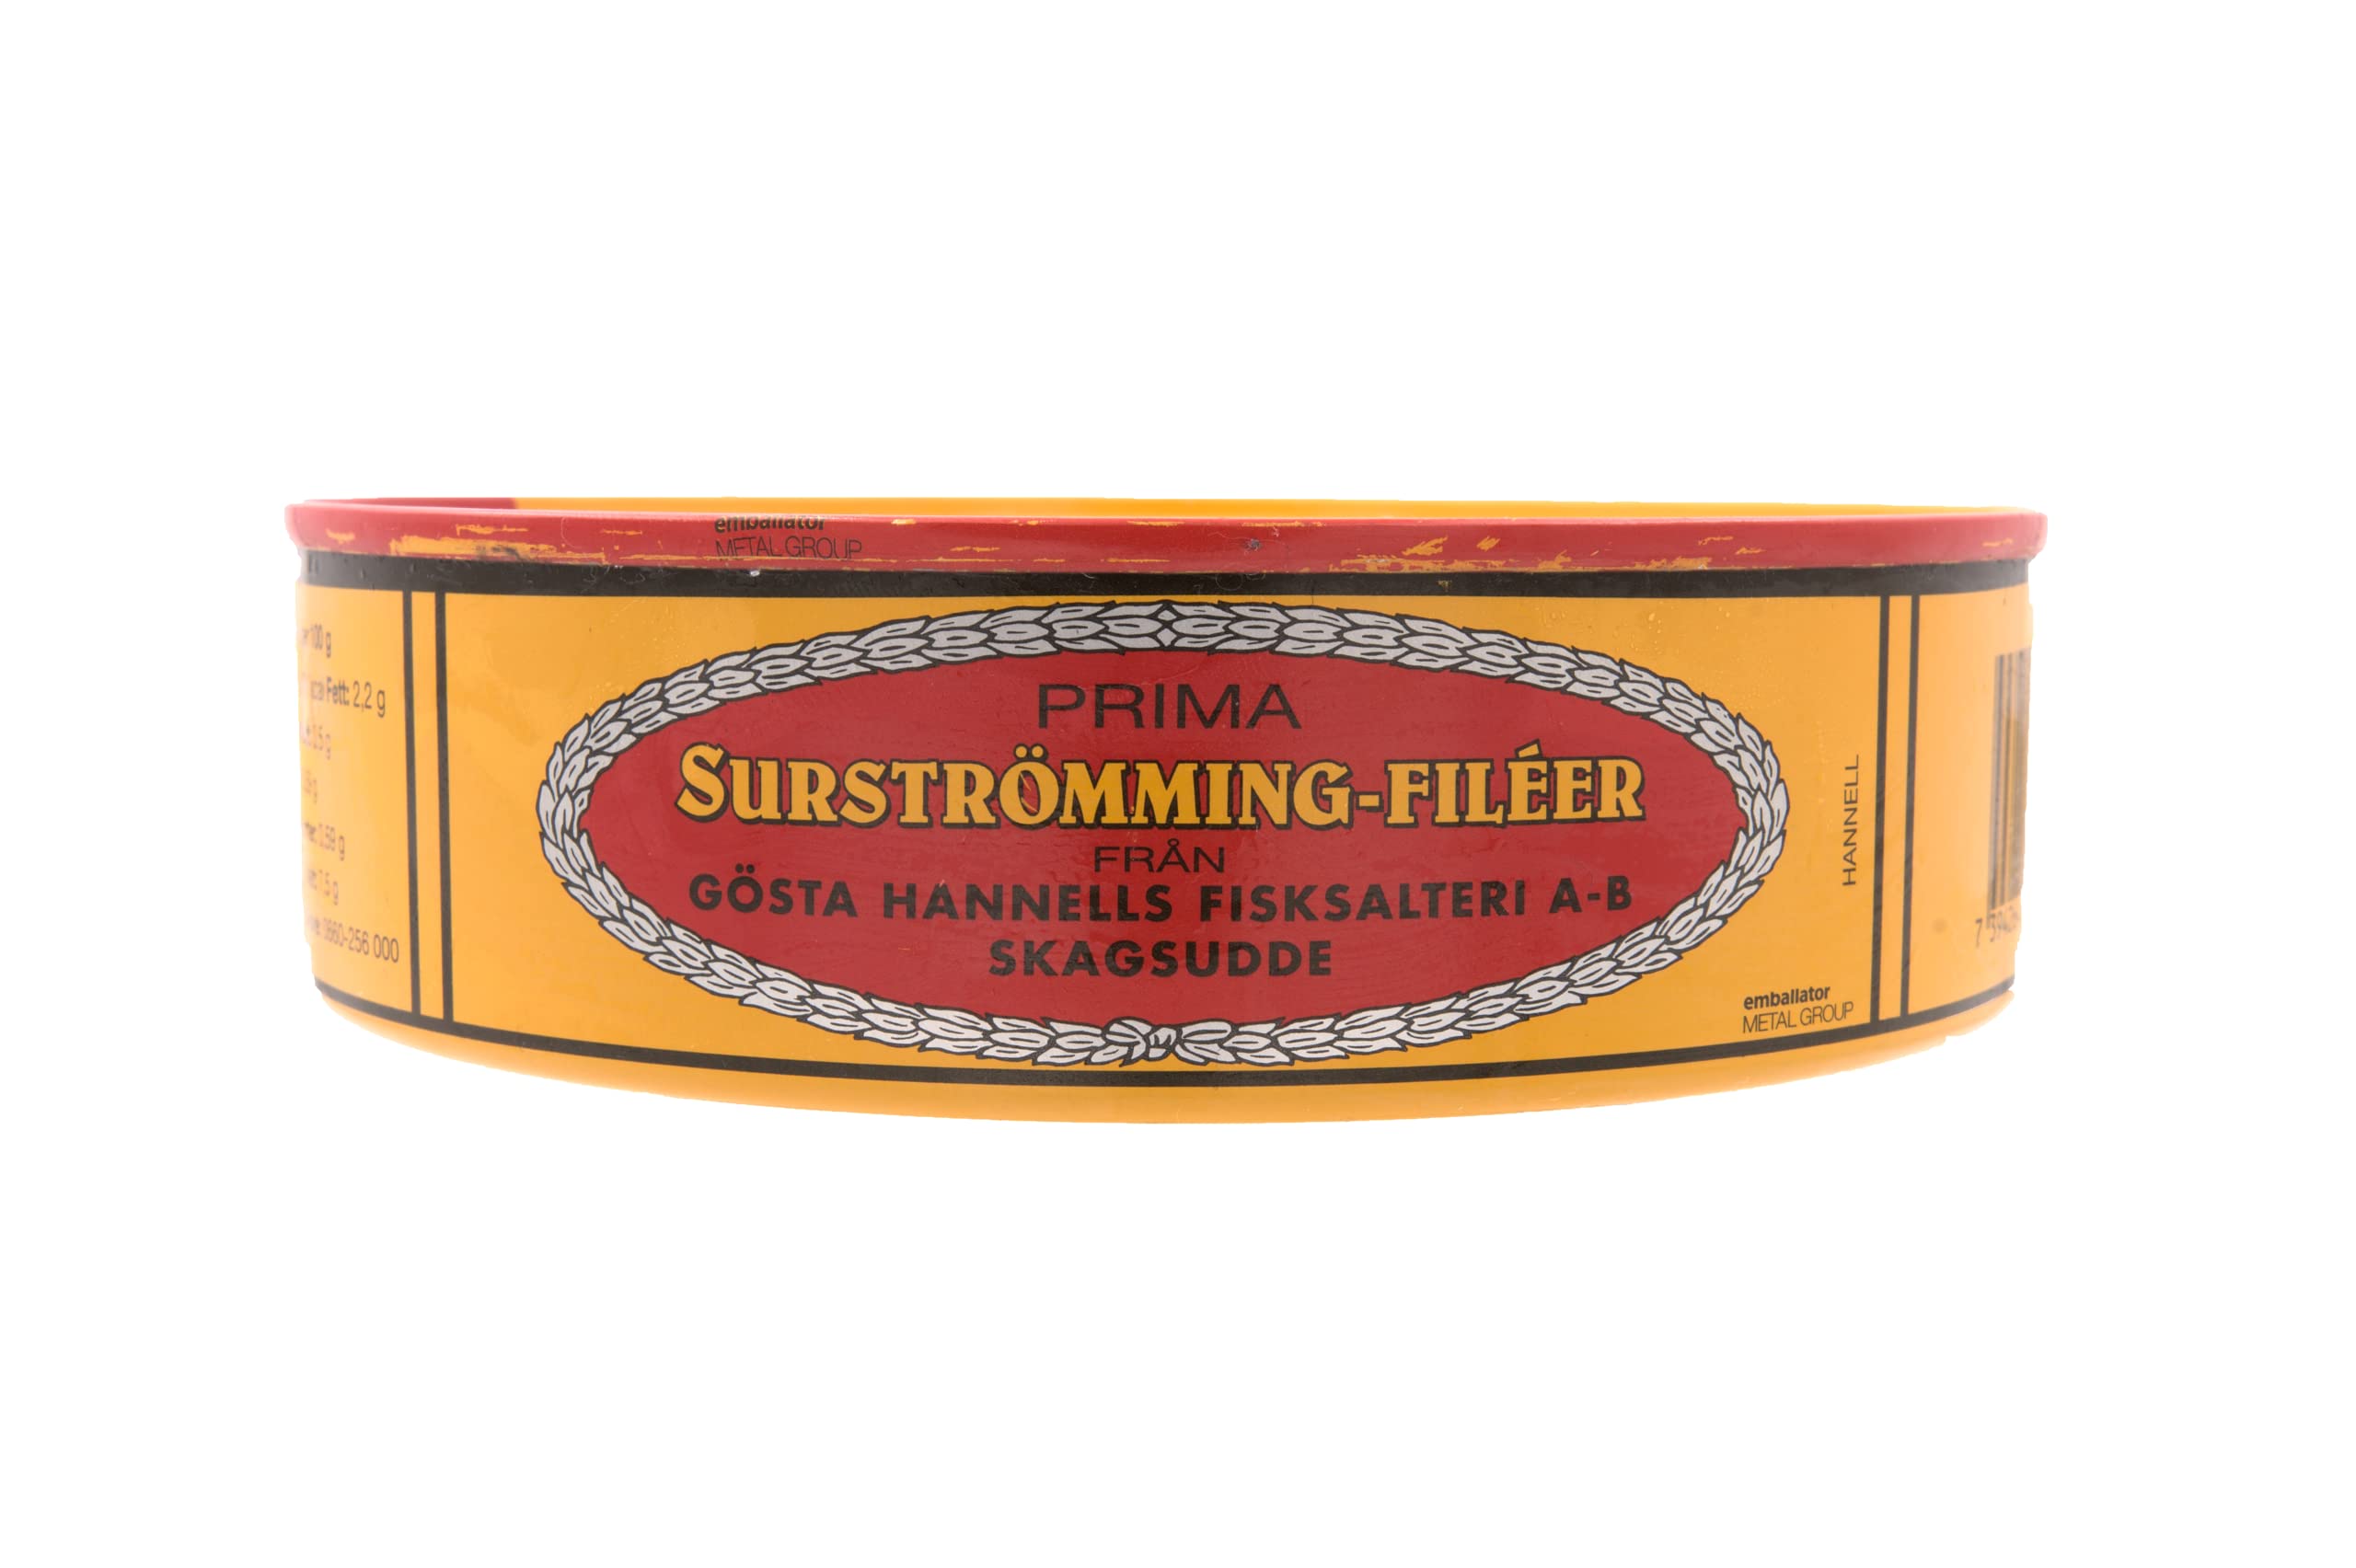 Surströmming: The World's Smelliest Food